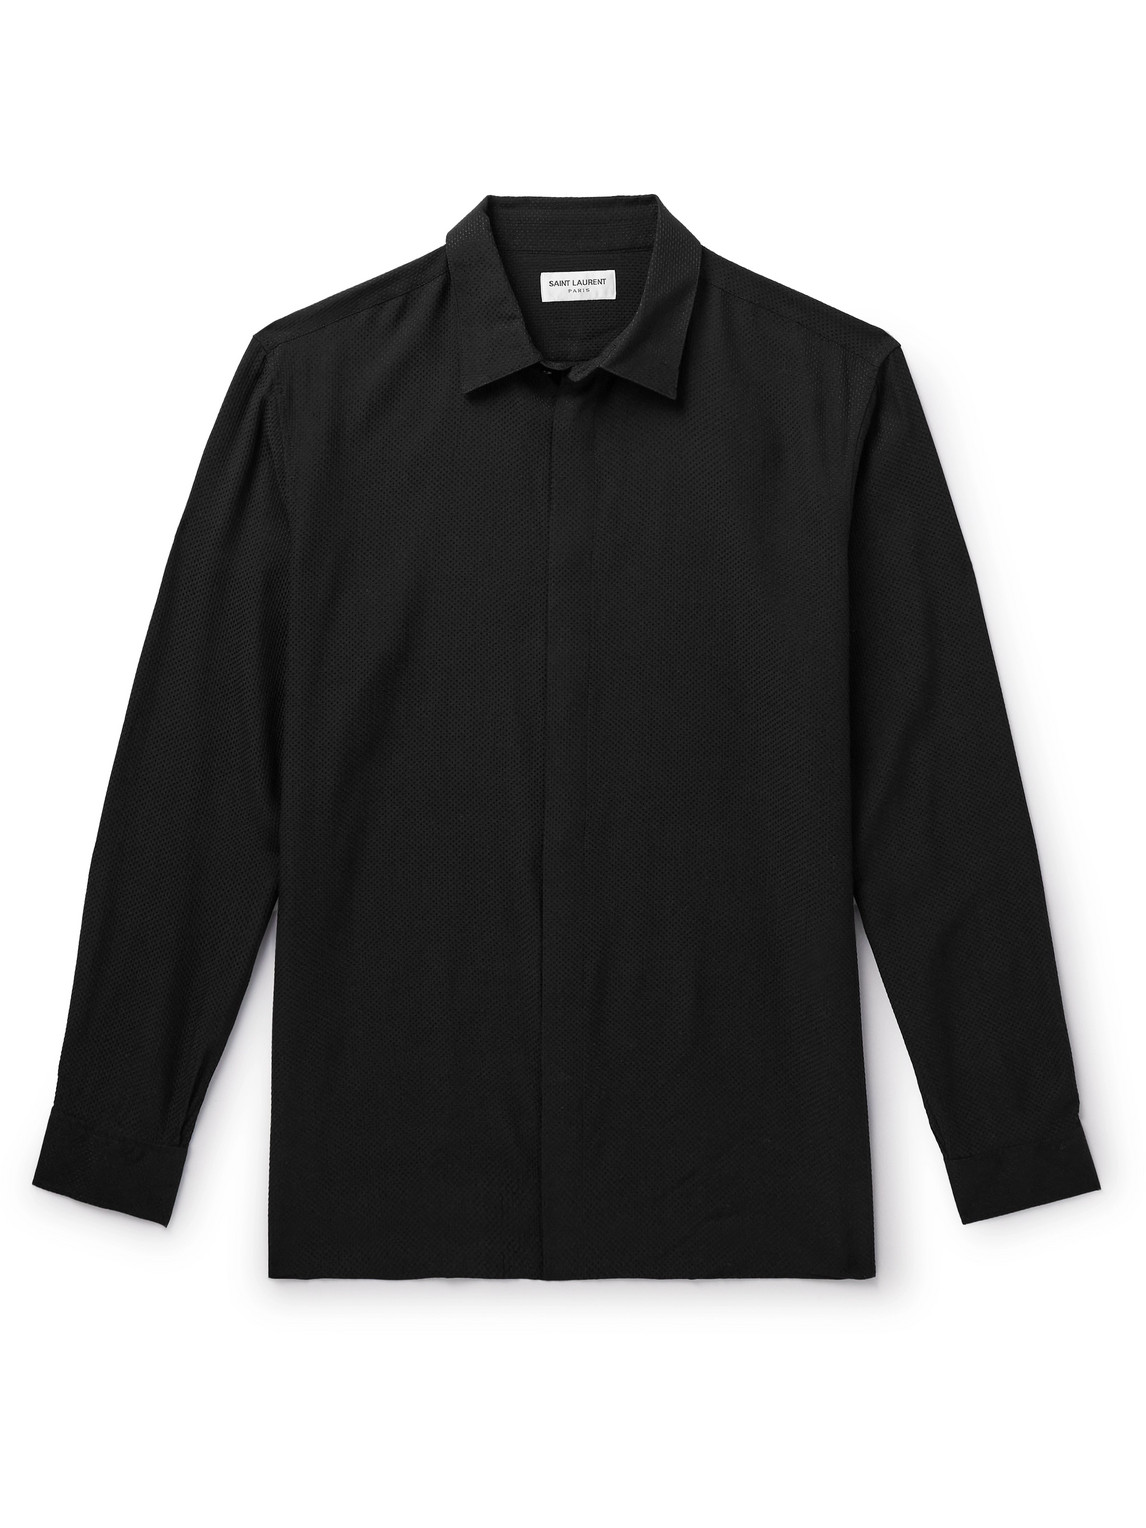 SAINT LAURENT - Polka-Dot Jacquard Shirt - Men - Black - 39 von SAINT LAURENT